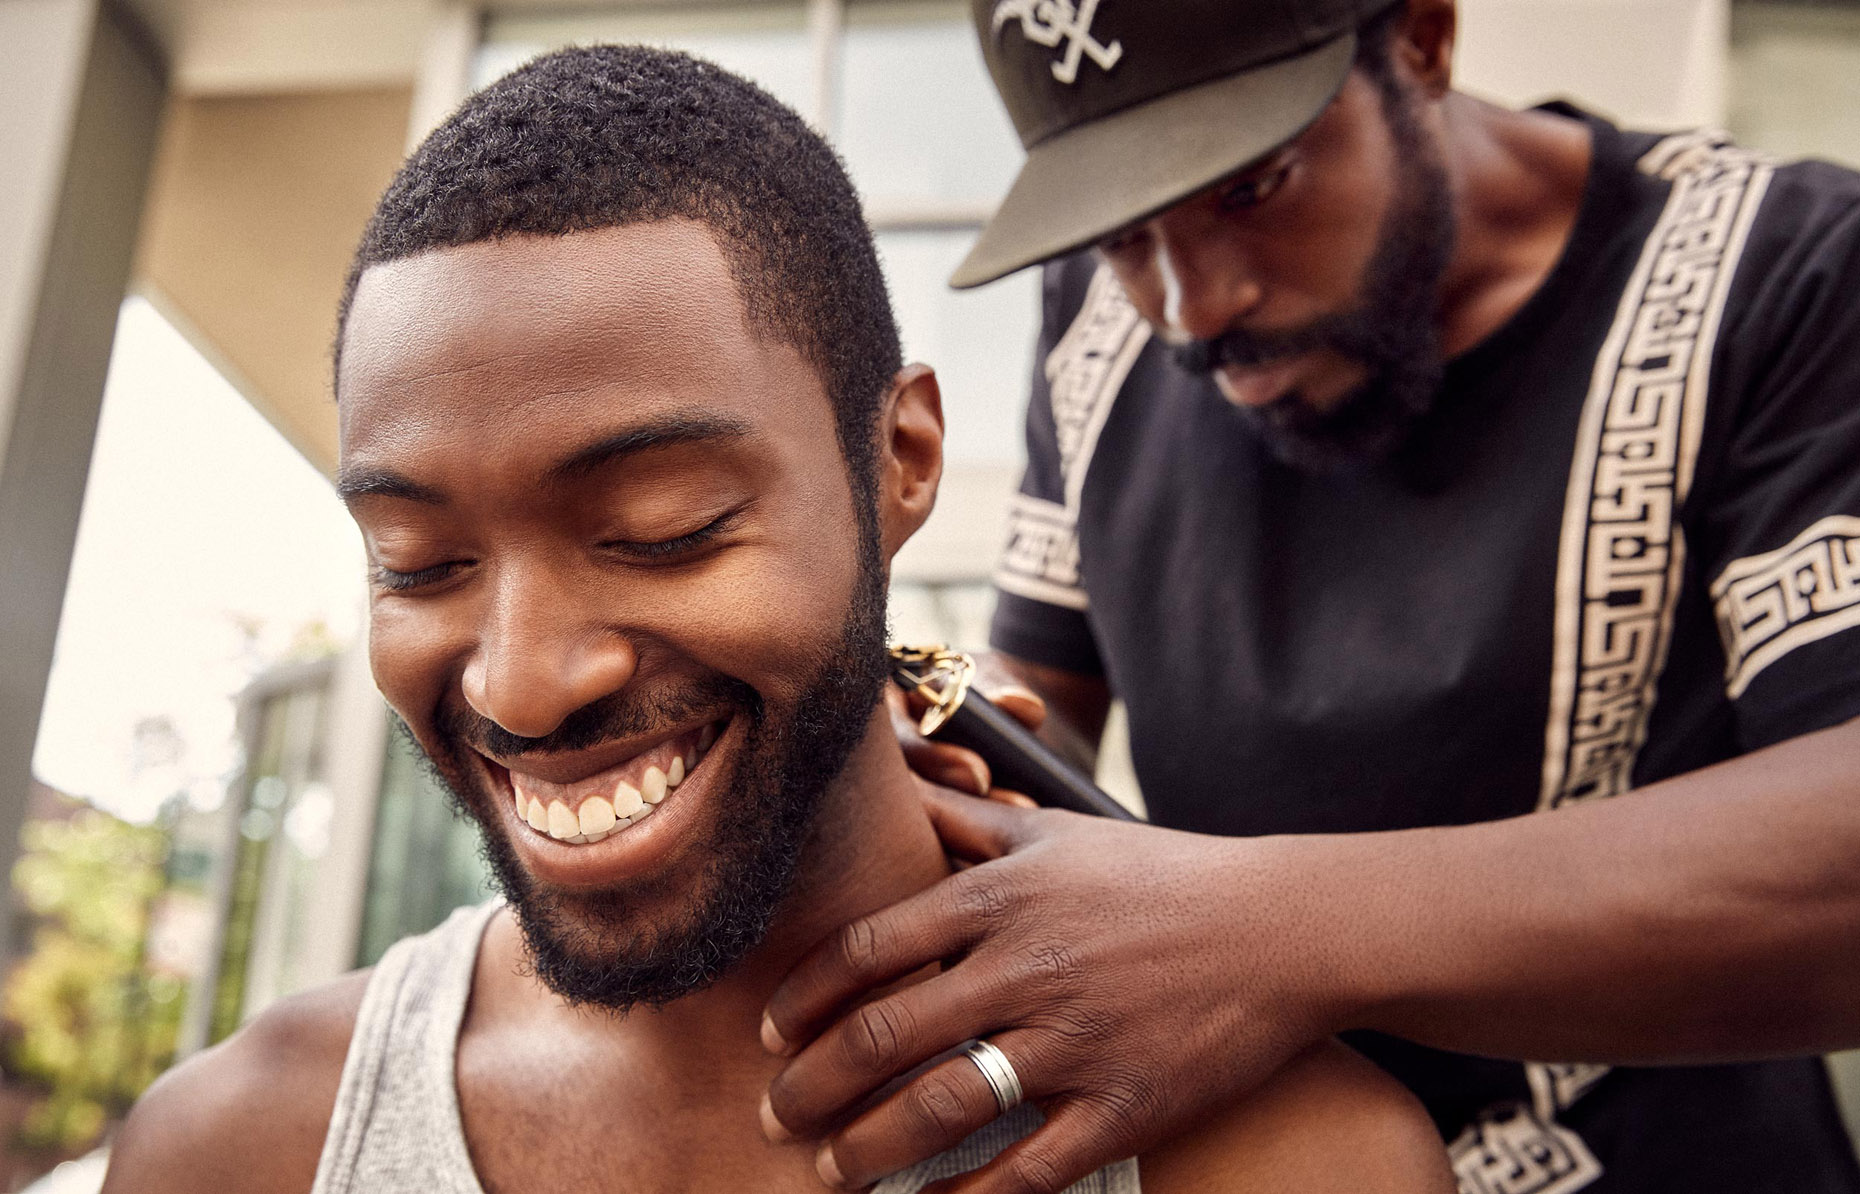 Smiling Black man enjoying a haircut | lifestyle photography by Saverio Truglia